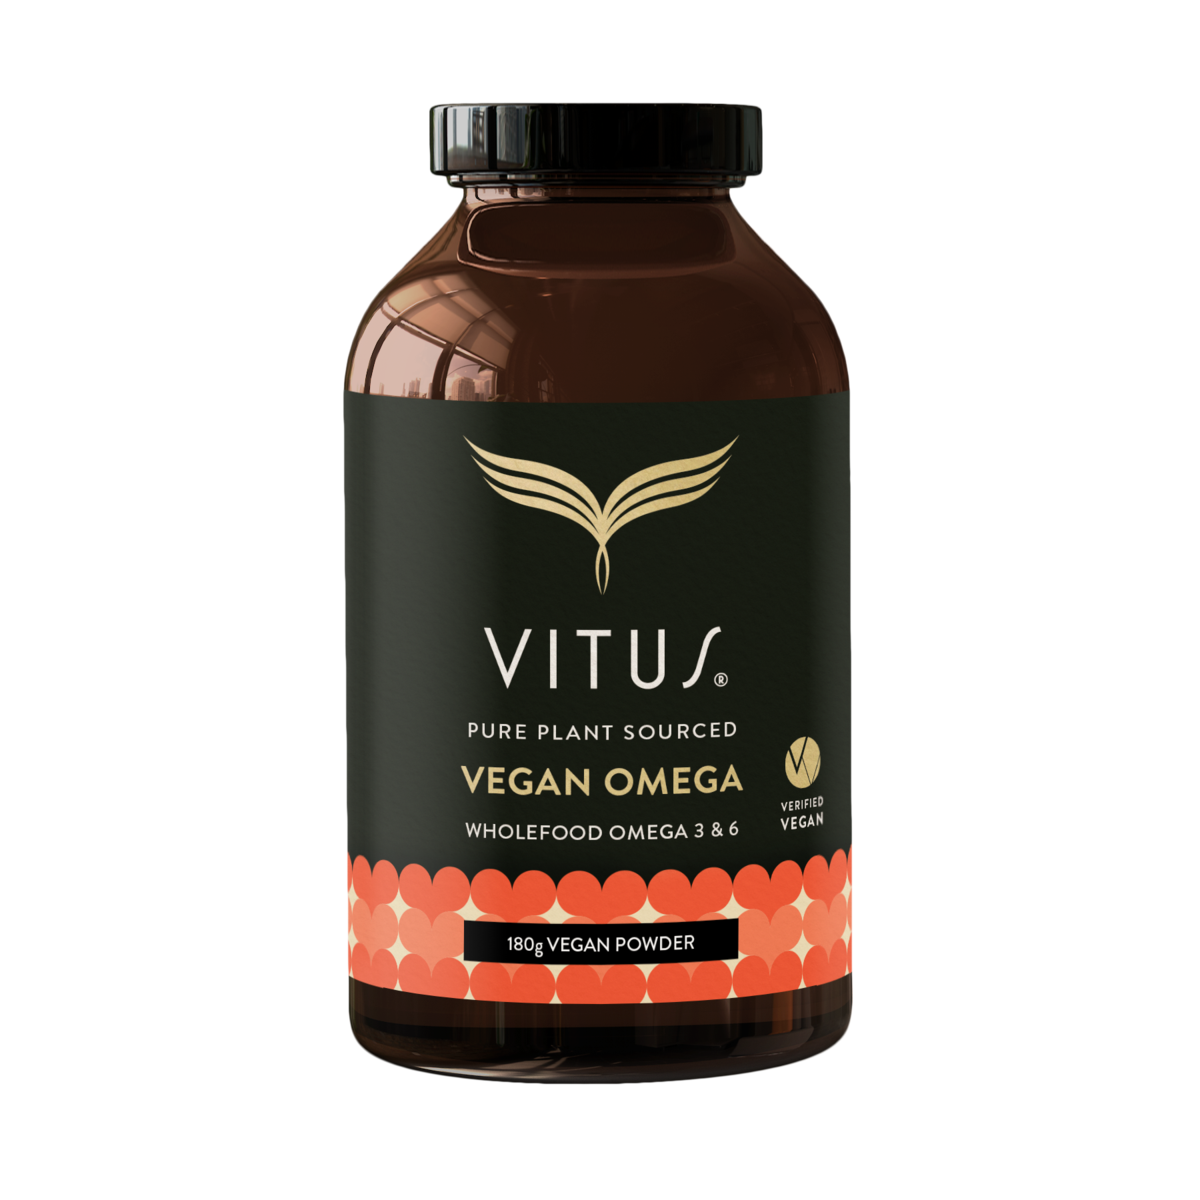 Vitus Vegan Omega 180g Vegan Powder